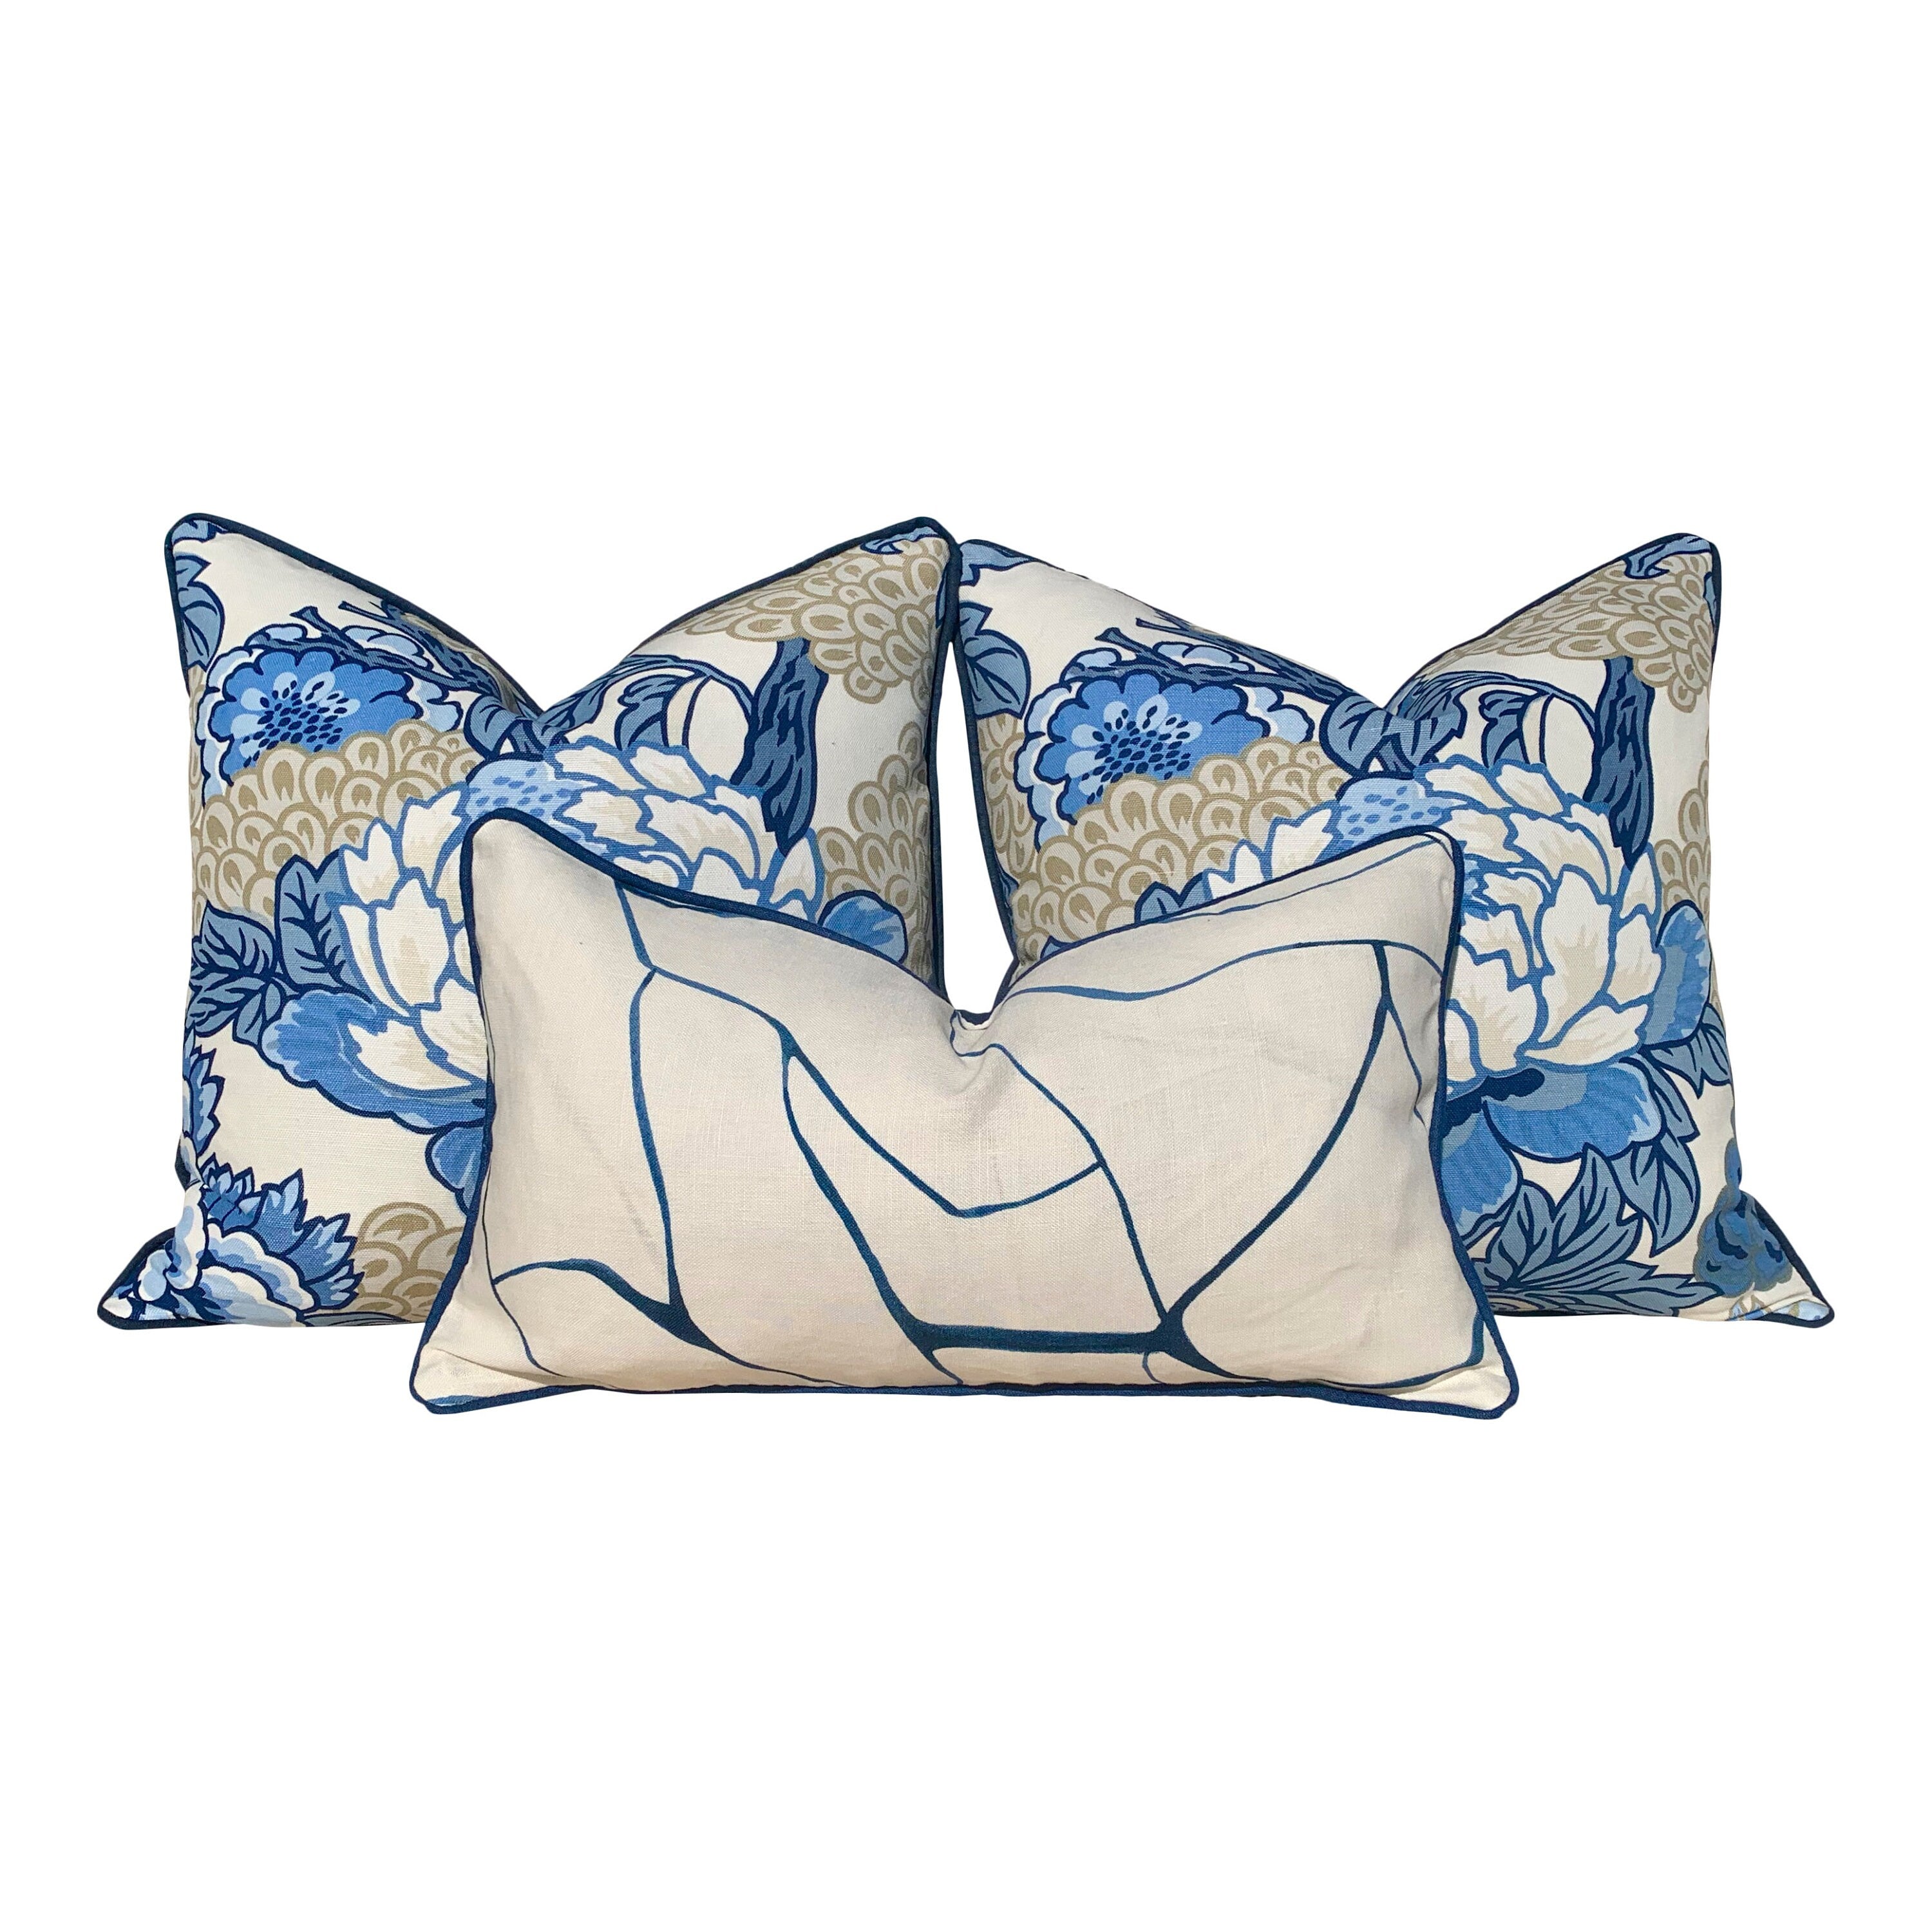 Thibaut Honshu Pillow Blue, White, Beige. Chinoiserie  Pillow. Lumbar Pillow.Designer pillows, accent cushion cover, decorative green pillow